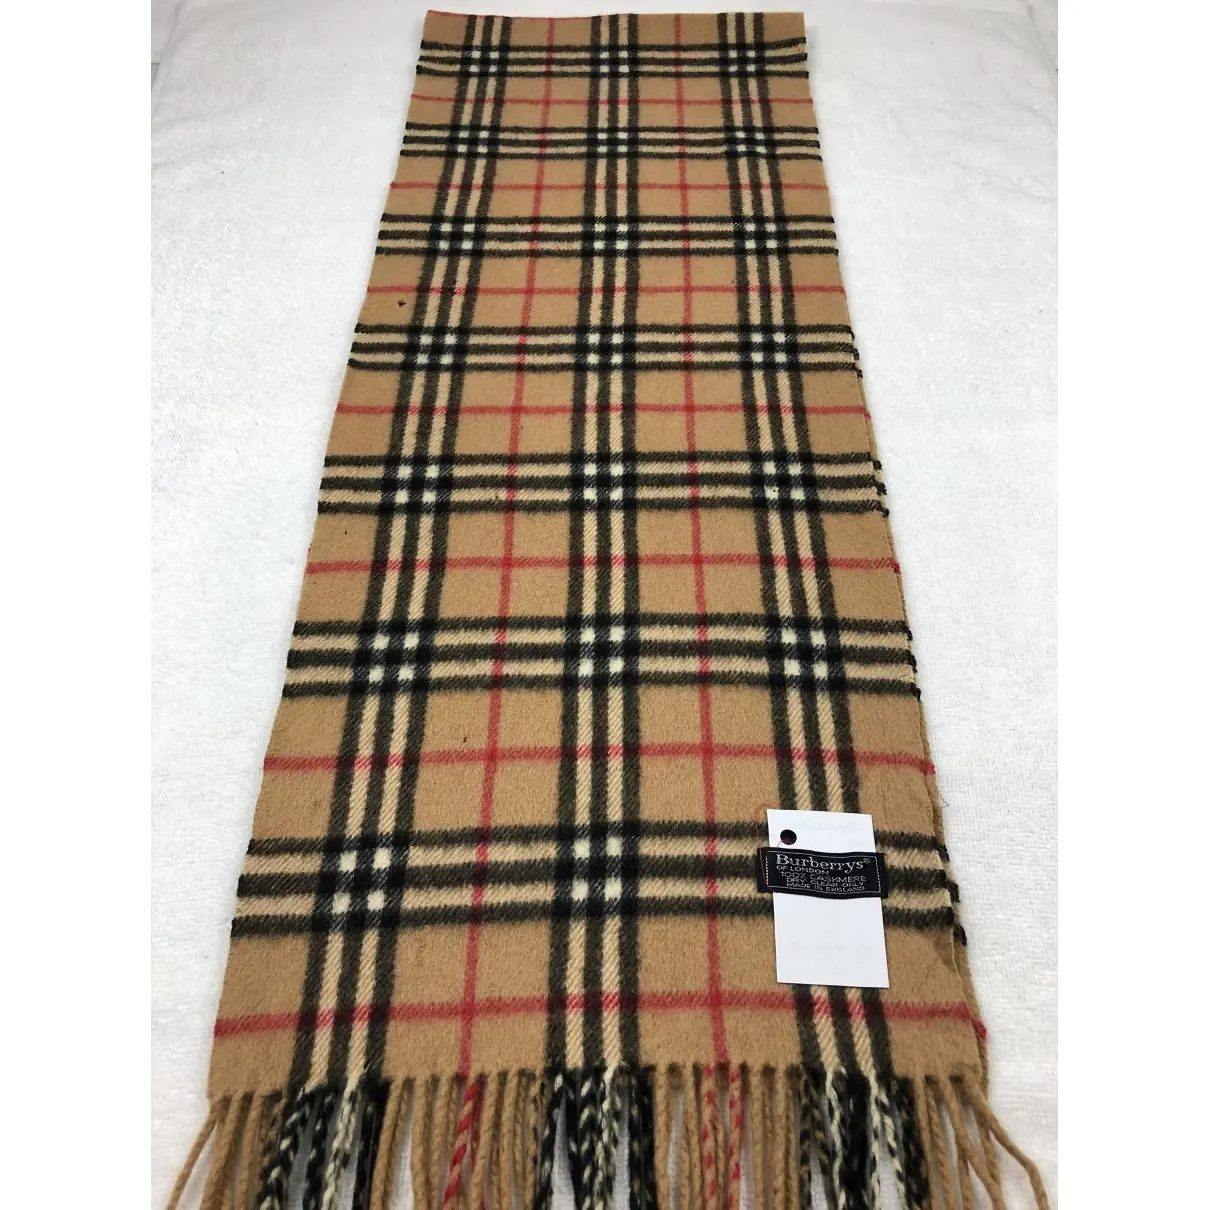 Burberry Cashmere scarf & pocket square for sale - Vintage